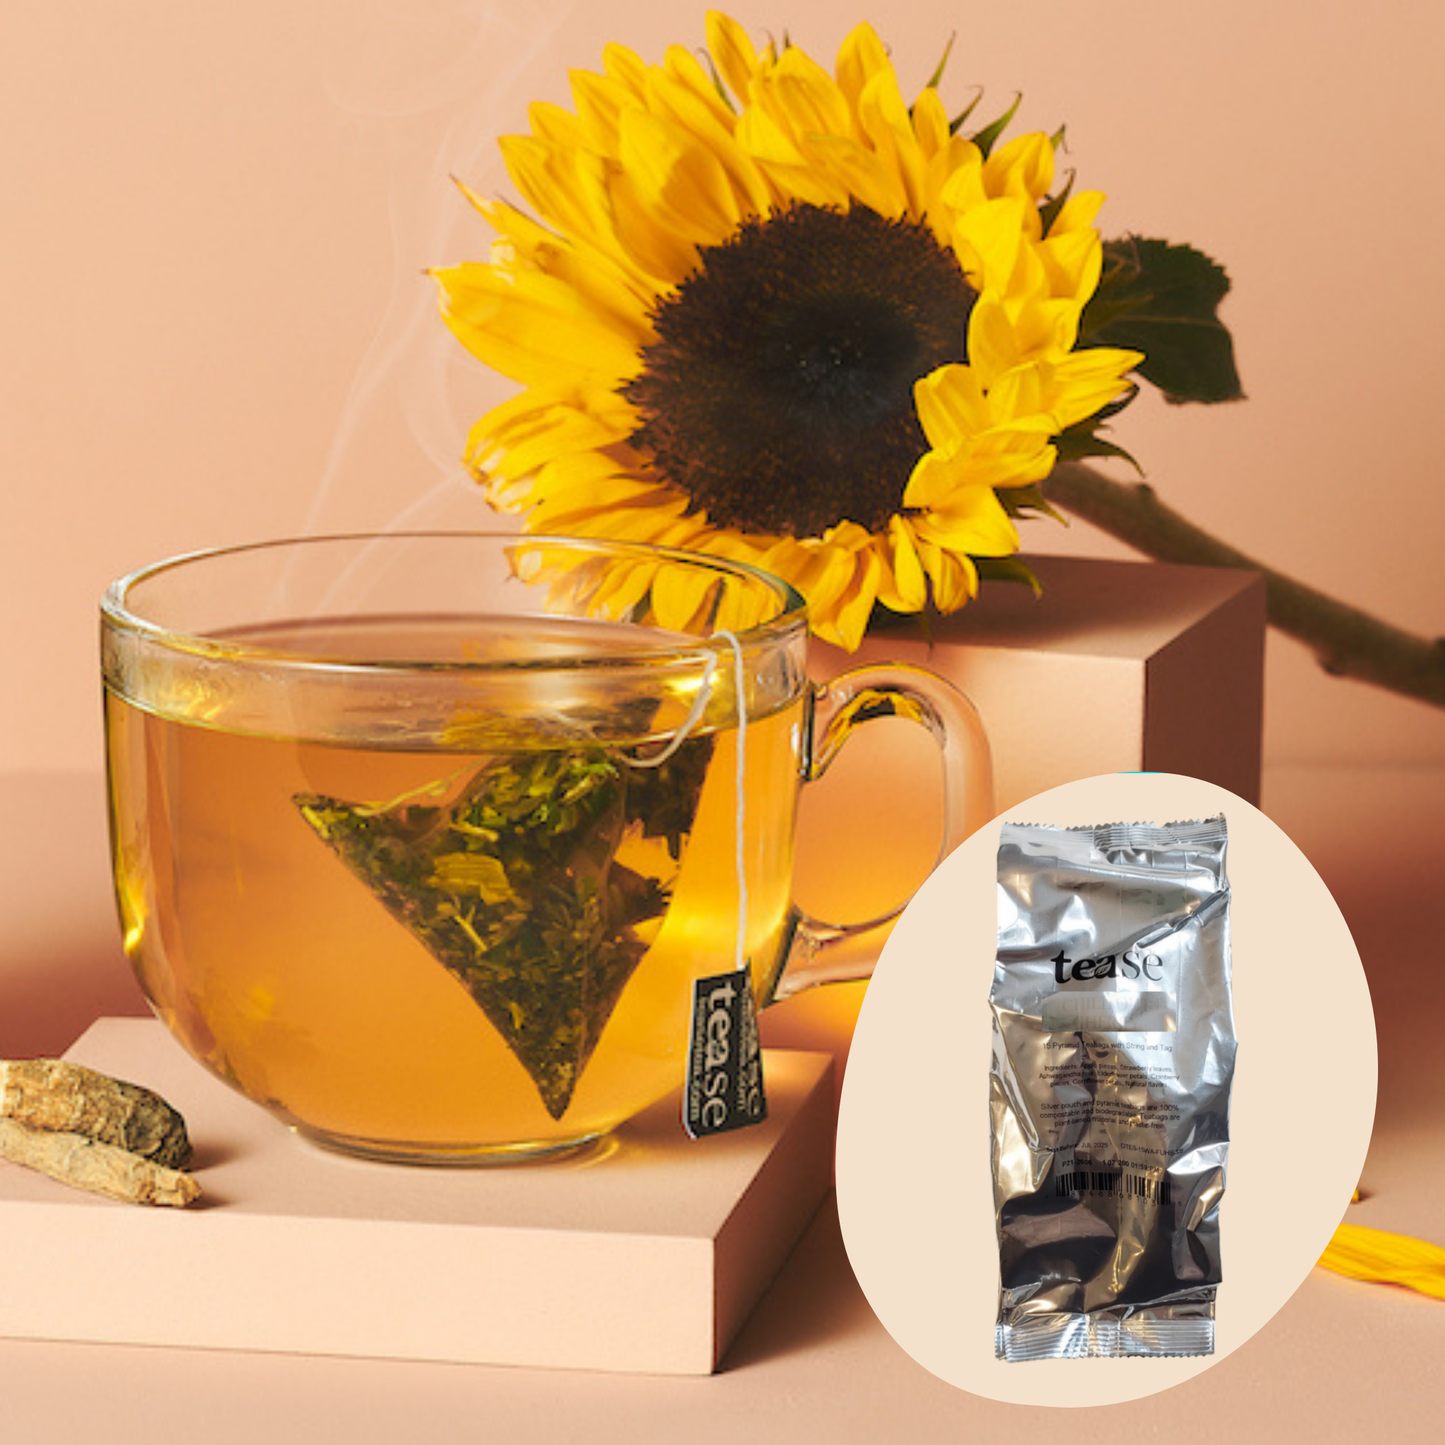 Tease - Hocus Focus Tea Refill | All Natural Yerba Mate Tea Blend